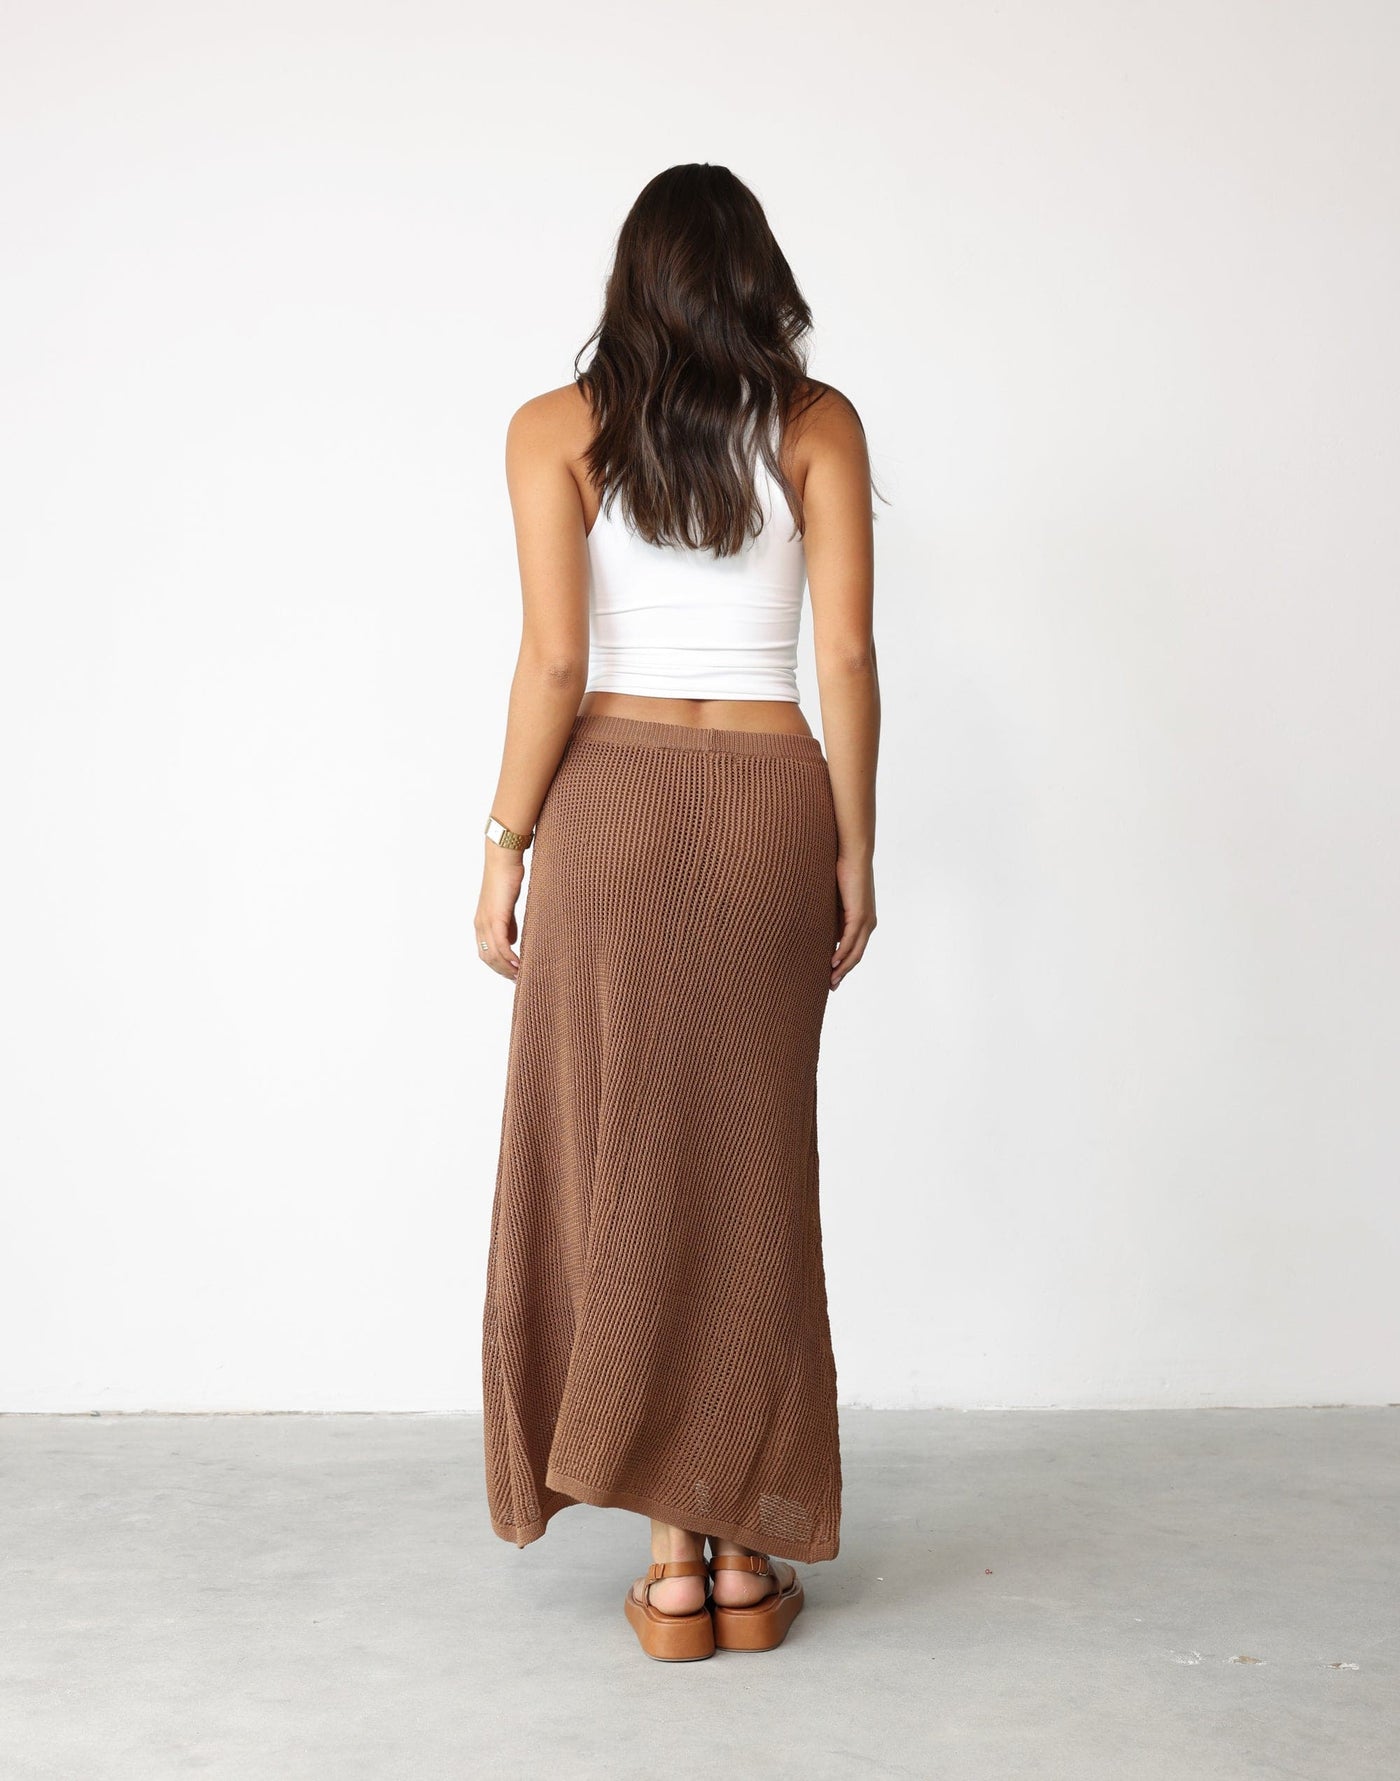 Niana Maxi Skirt (Mocha) - Flowy Lined Knit Overlay Maxi Dress - Women's Skirt - Charcoal Clothing